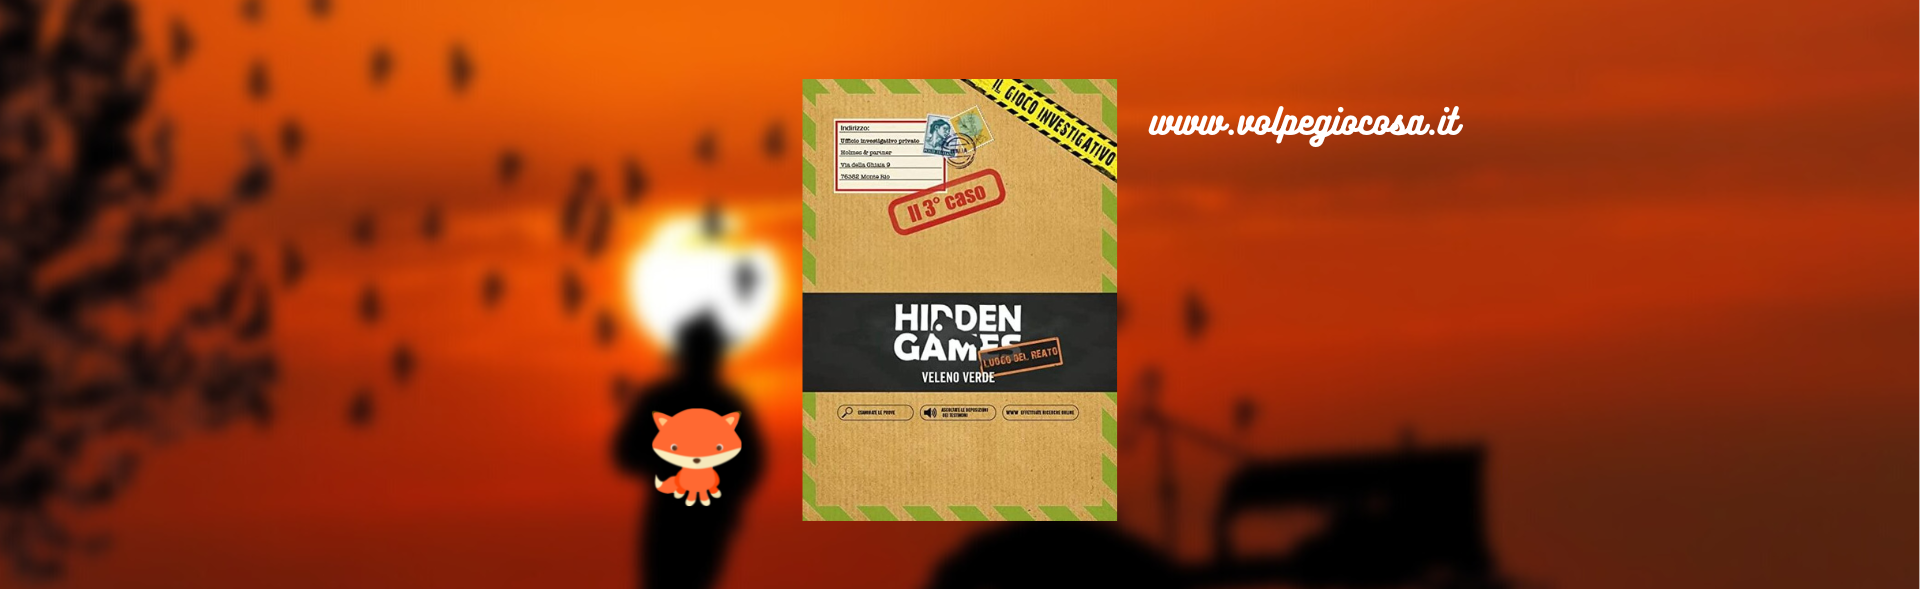 Hidden games gioco investigativo